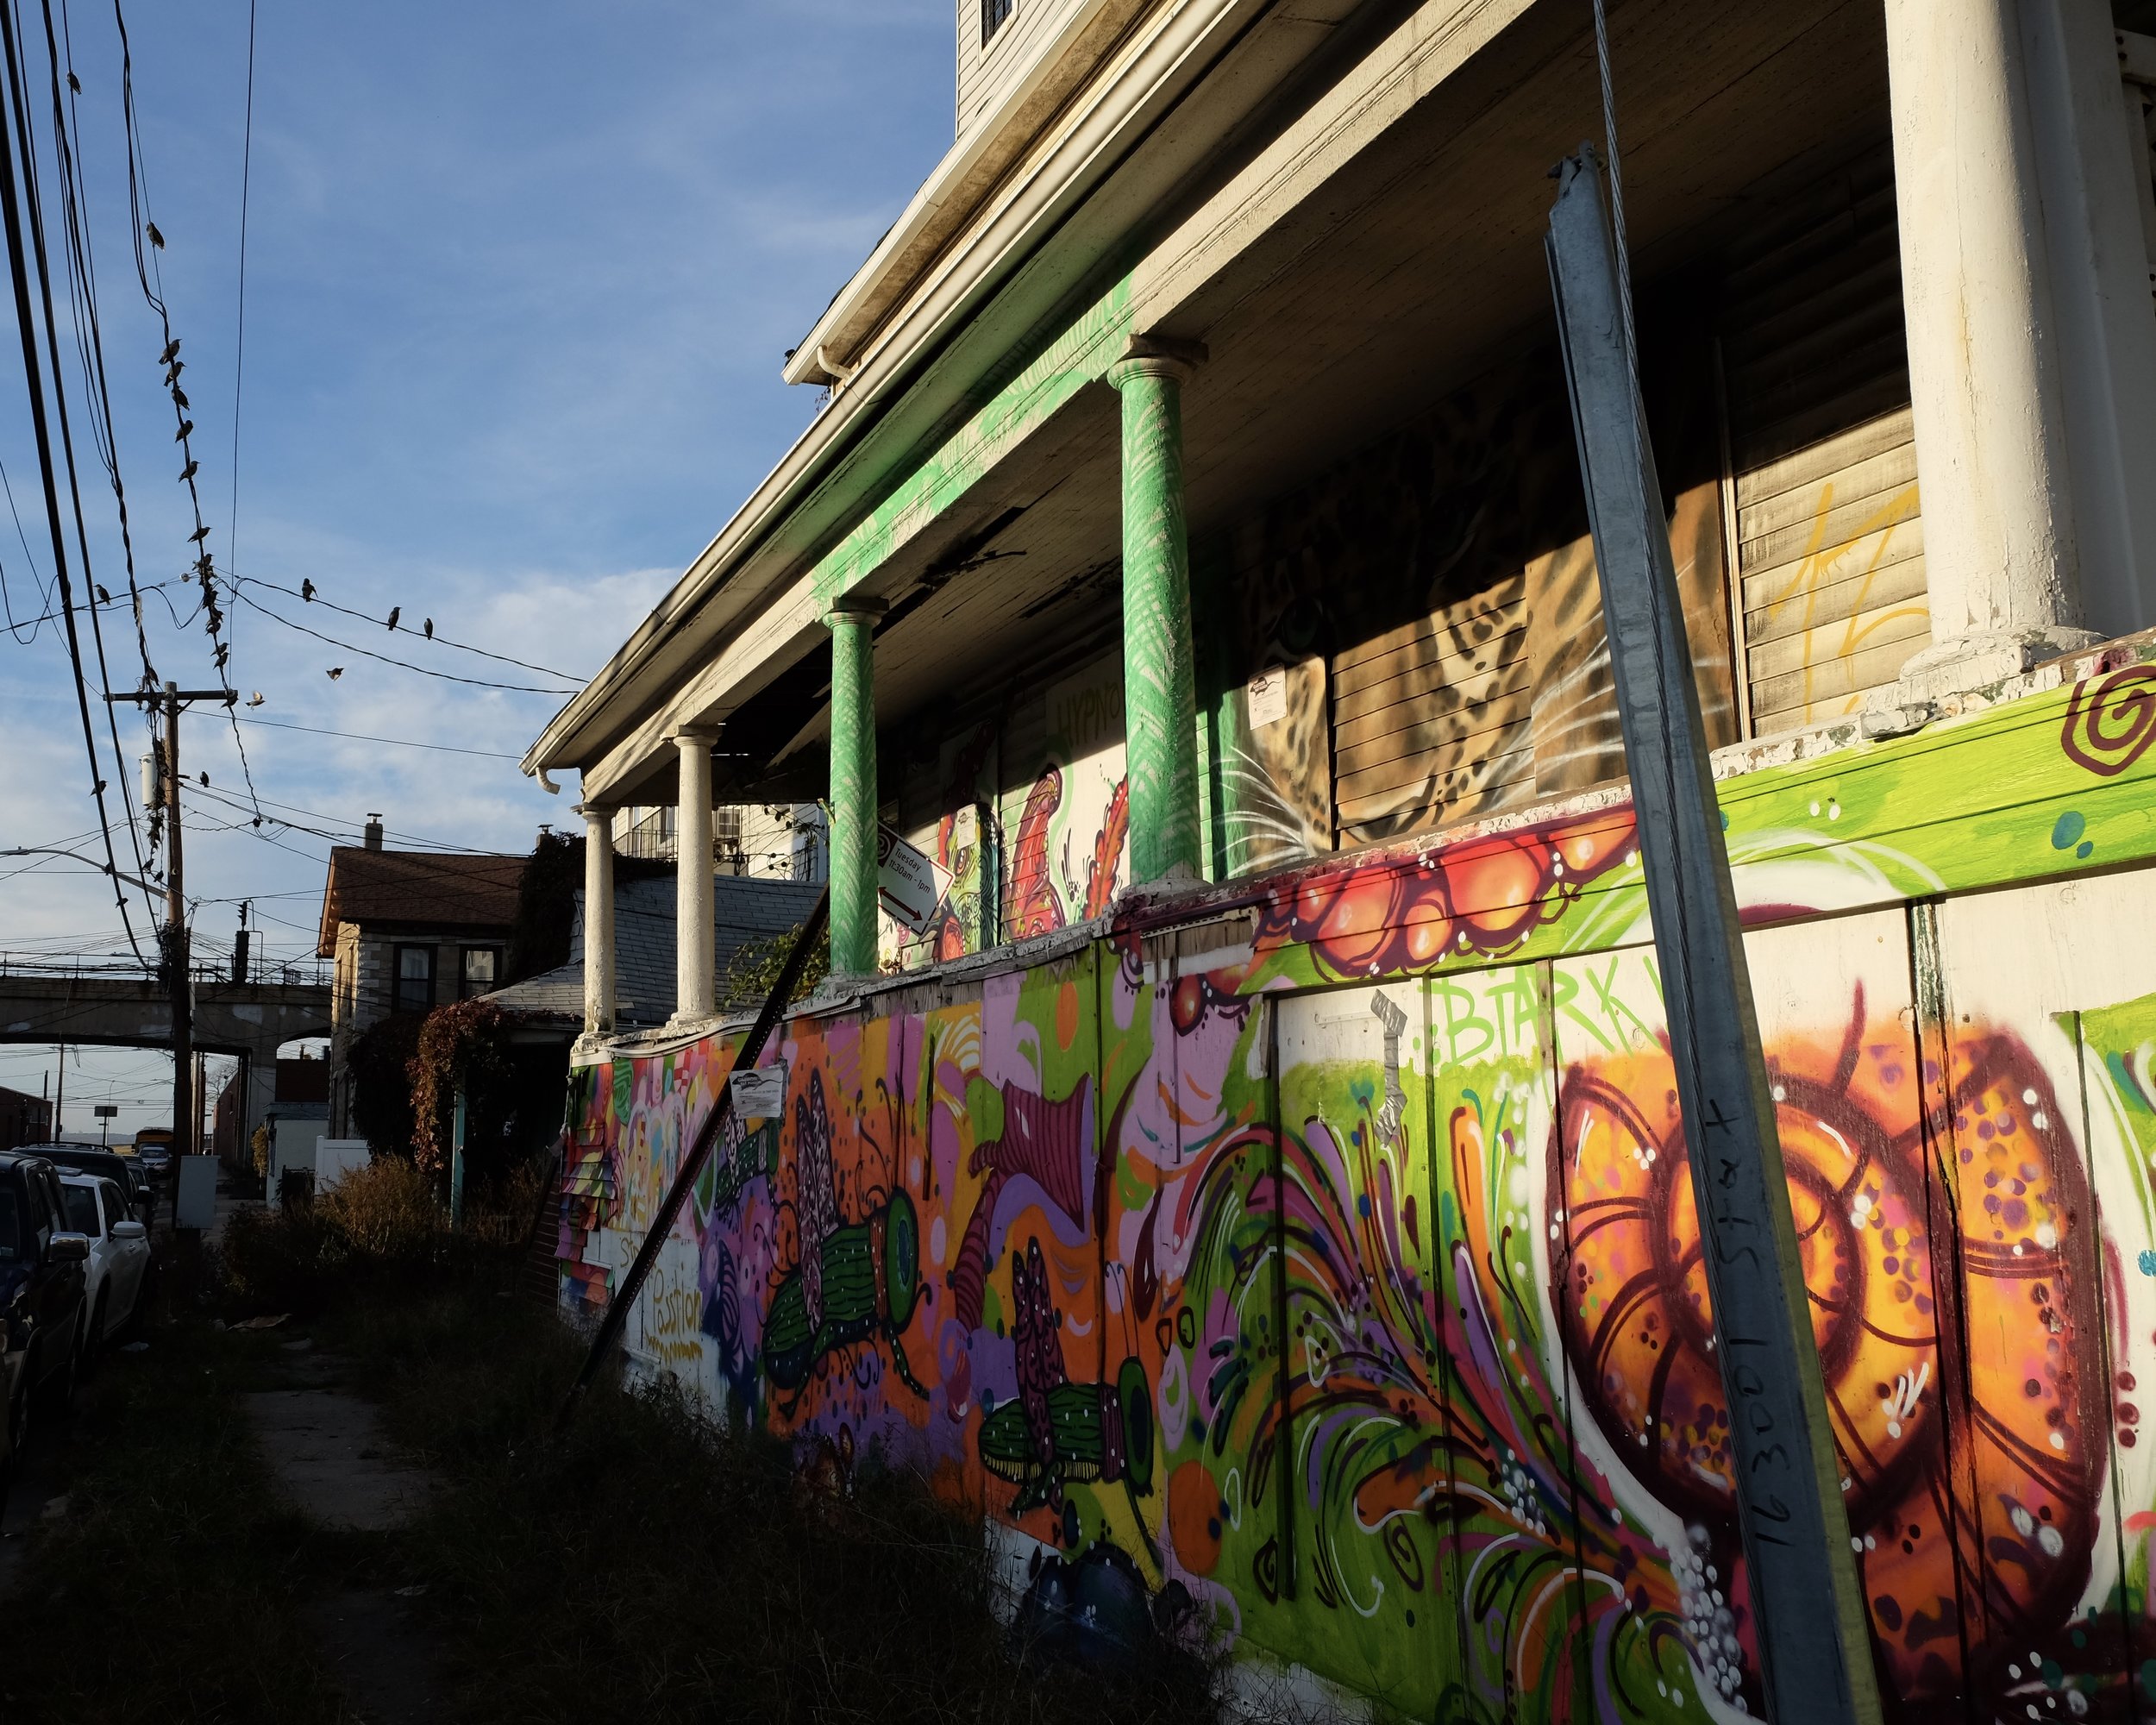 Abandoned Rockaways - One Part Living Art, One Part Unsafe